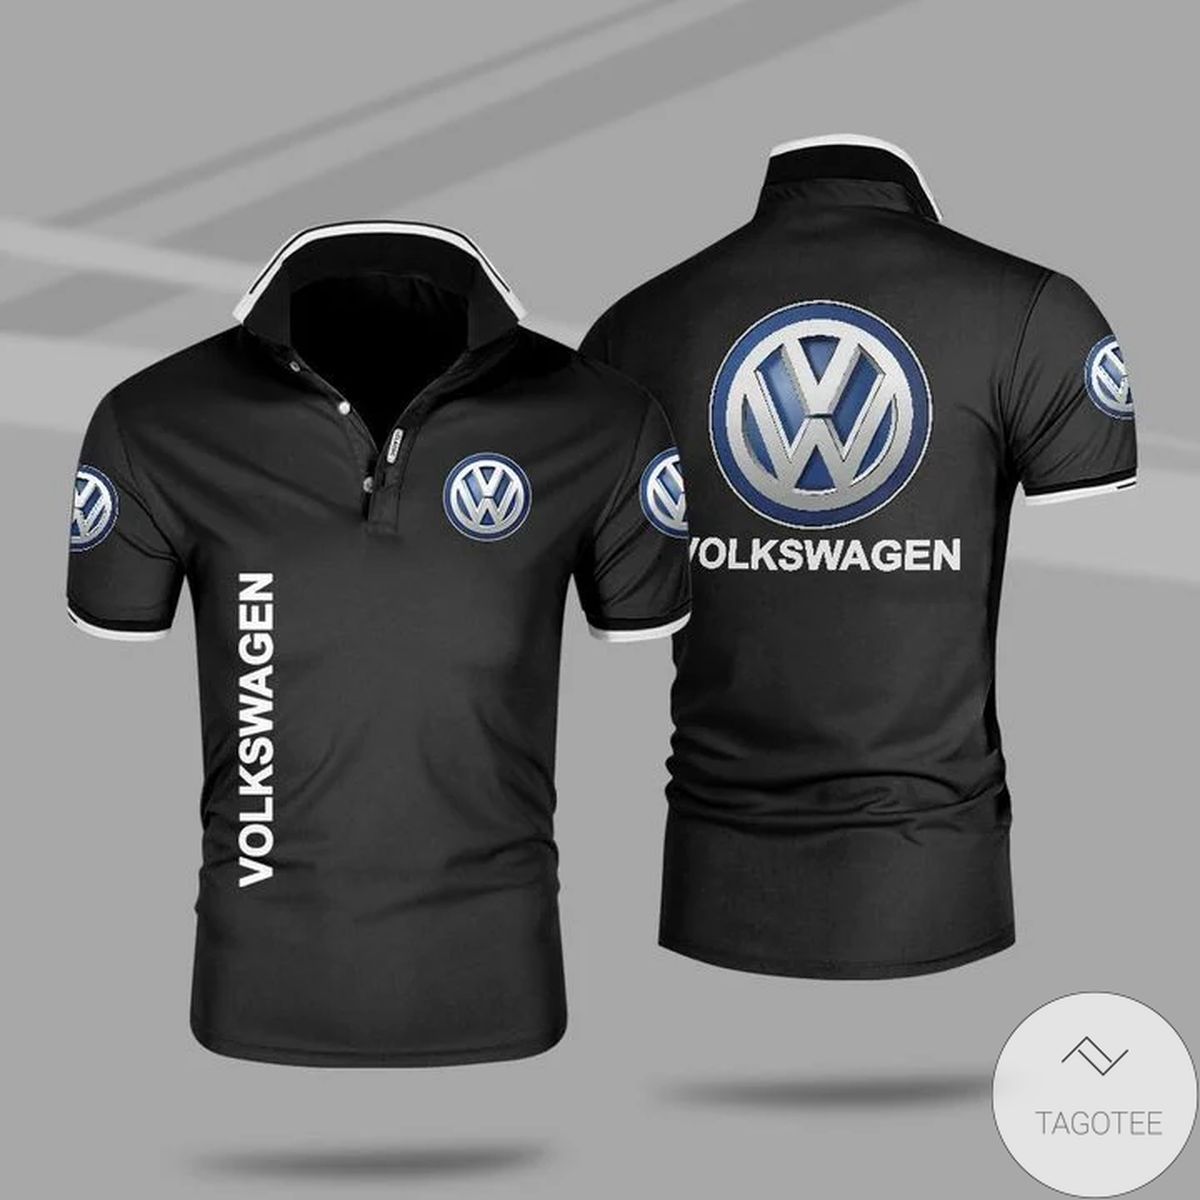 Top Rated Volkswagen Polo Shirt | Myteashirts